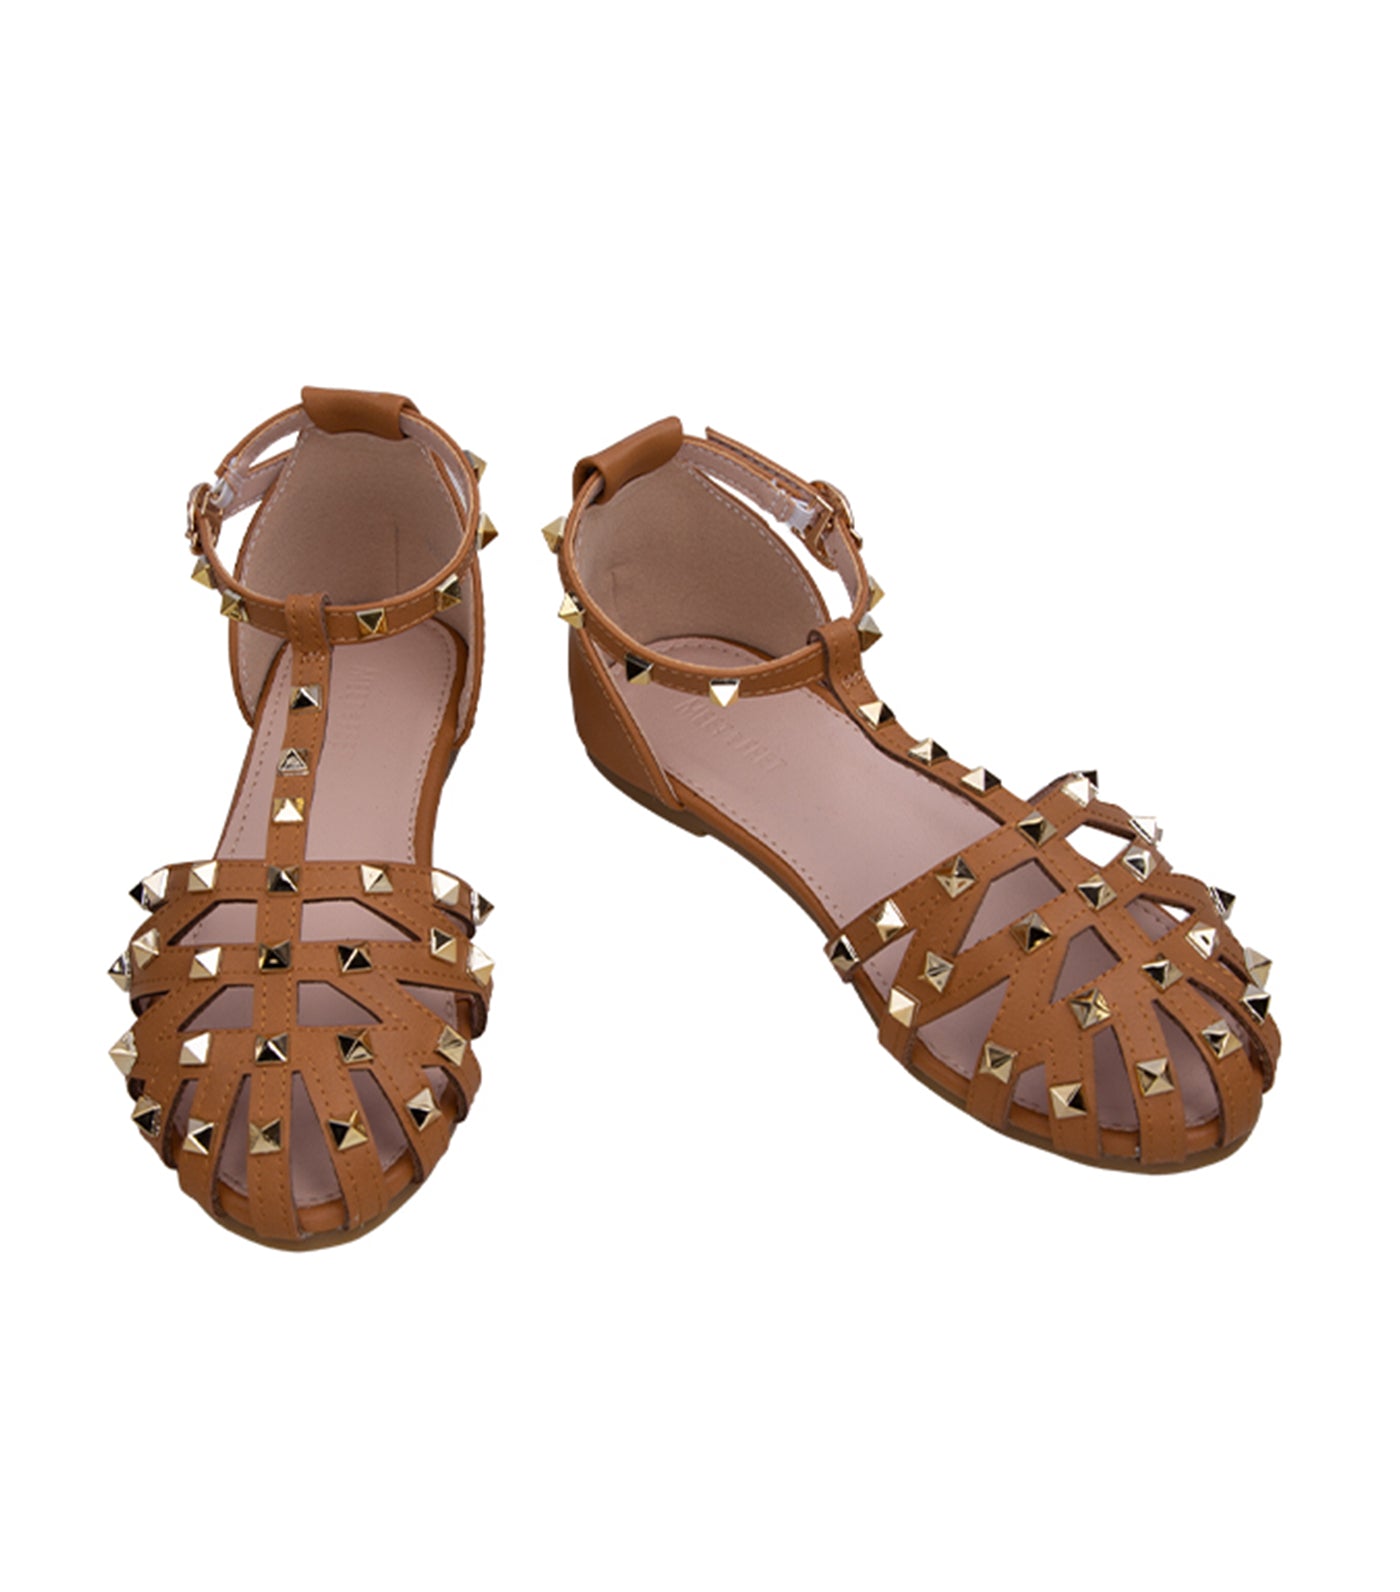 Brana Kids Sandals for Girls - Tan